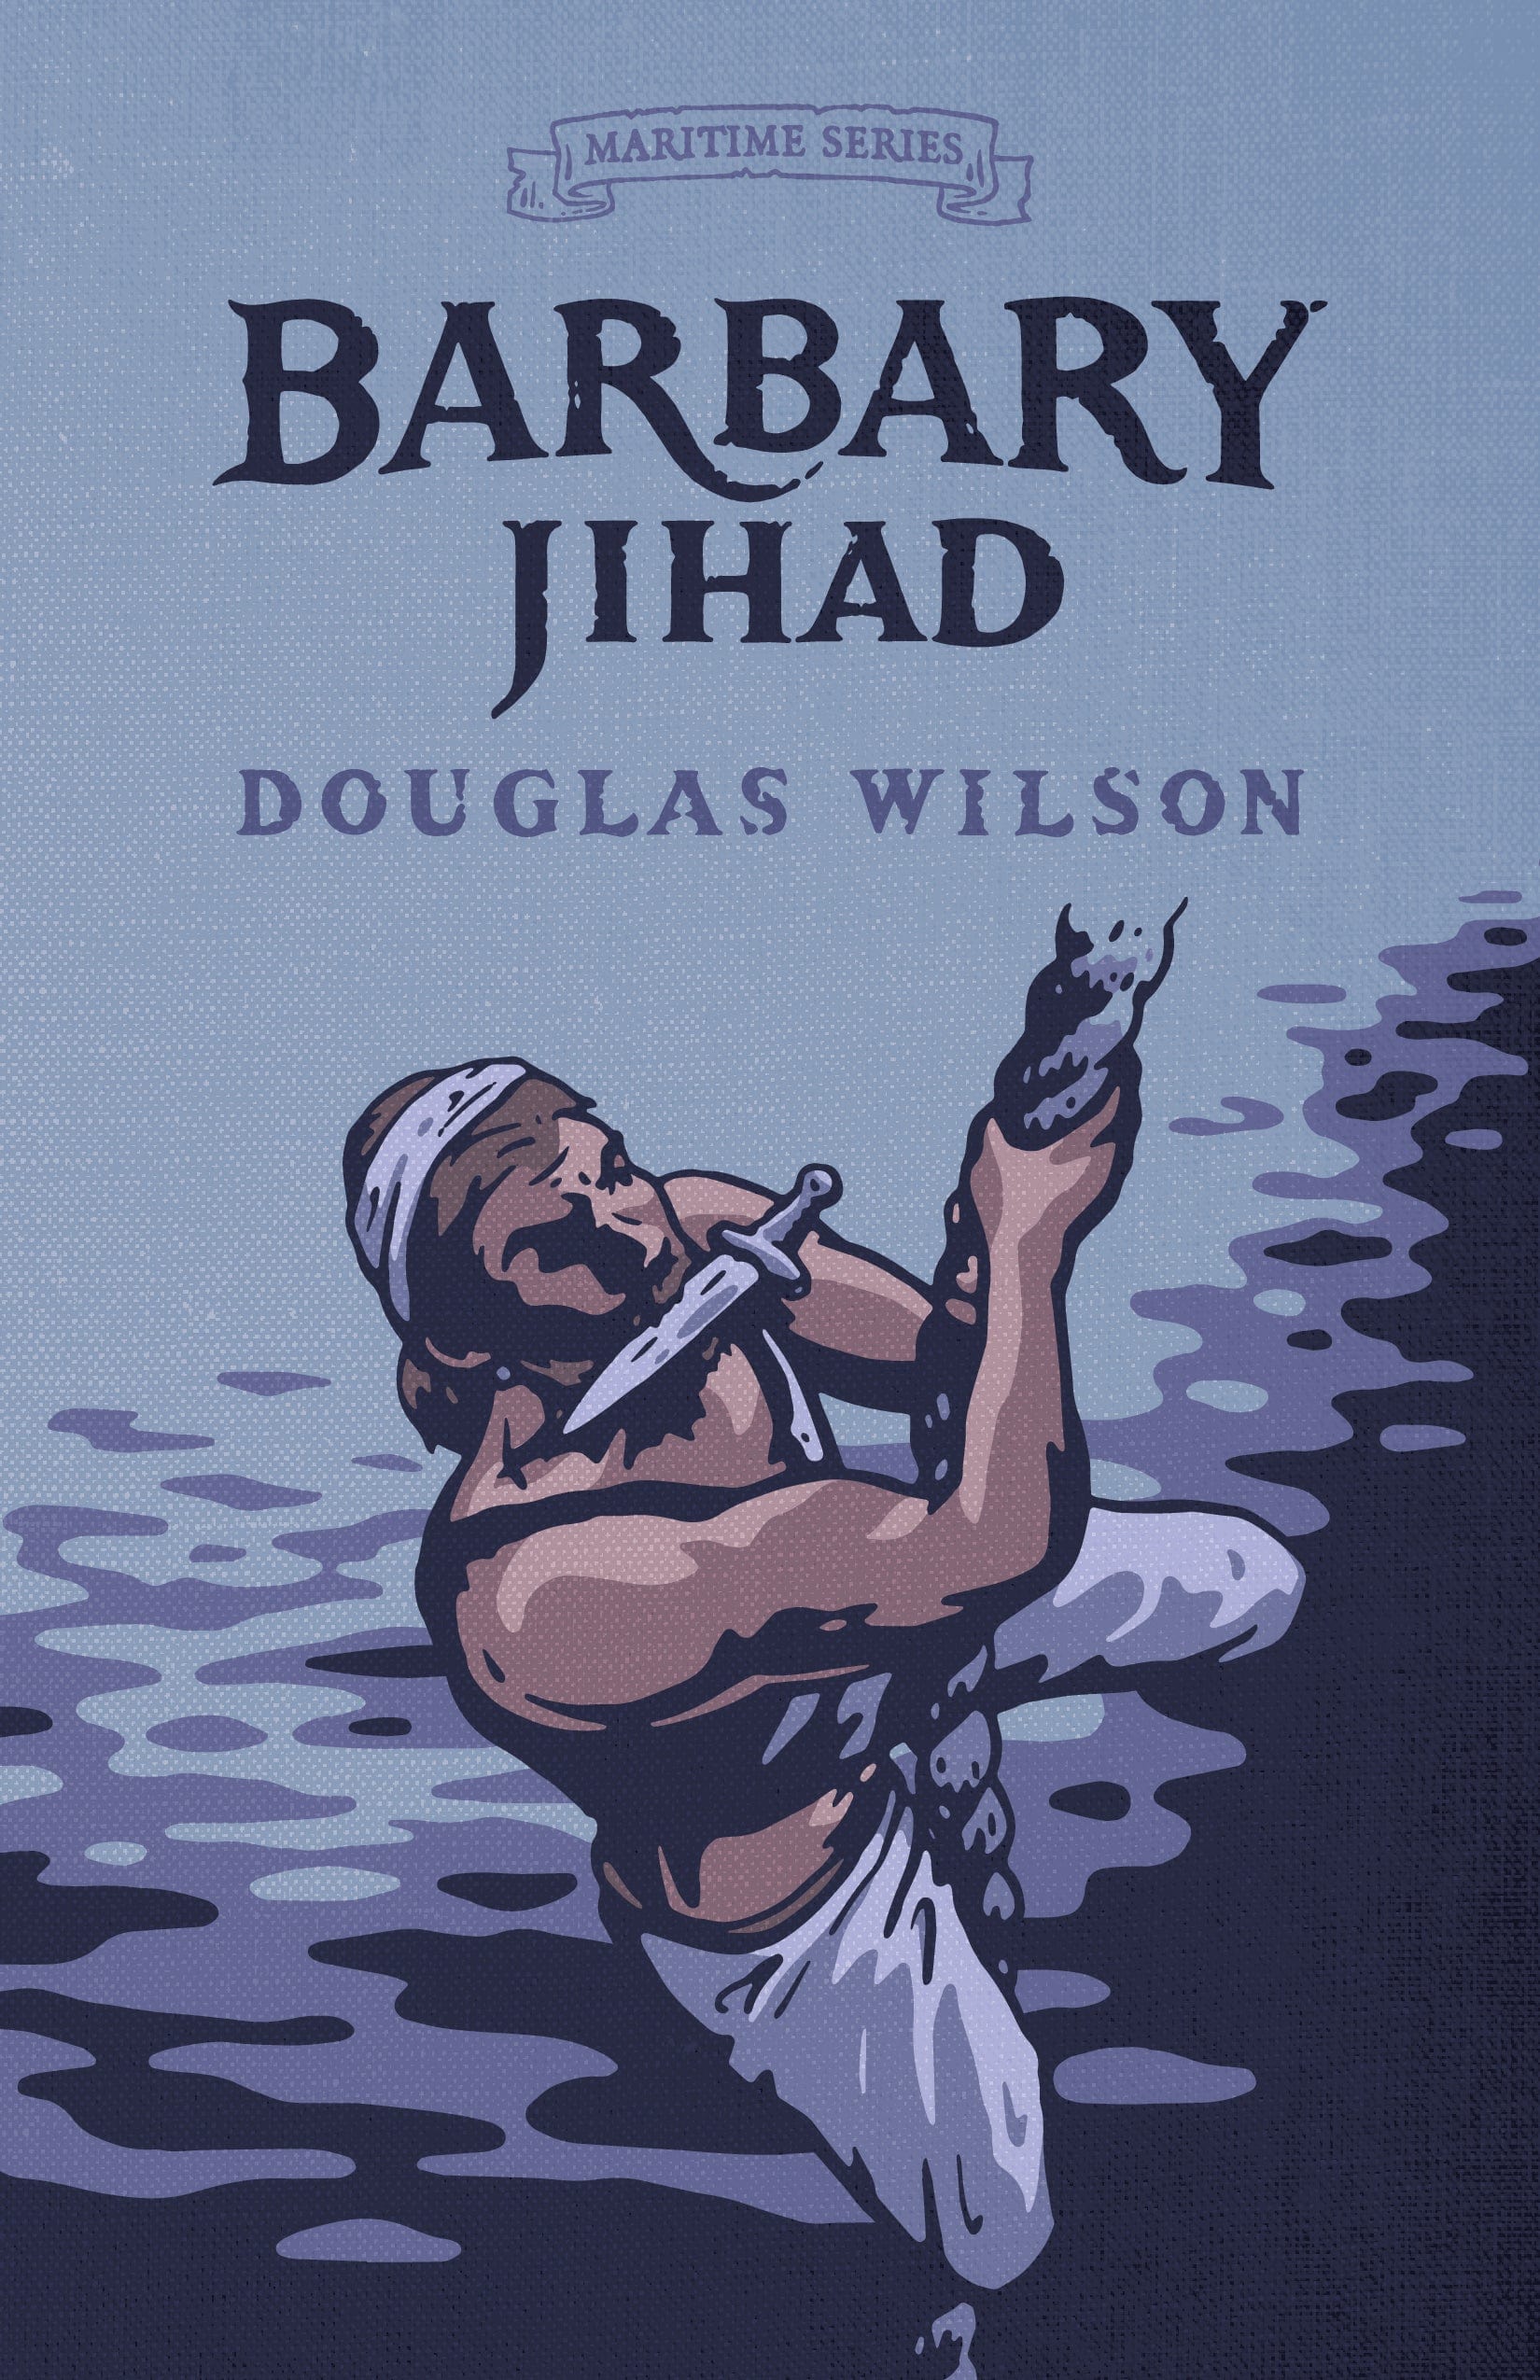 Barbary Jihad (Maritime Series Book 4)